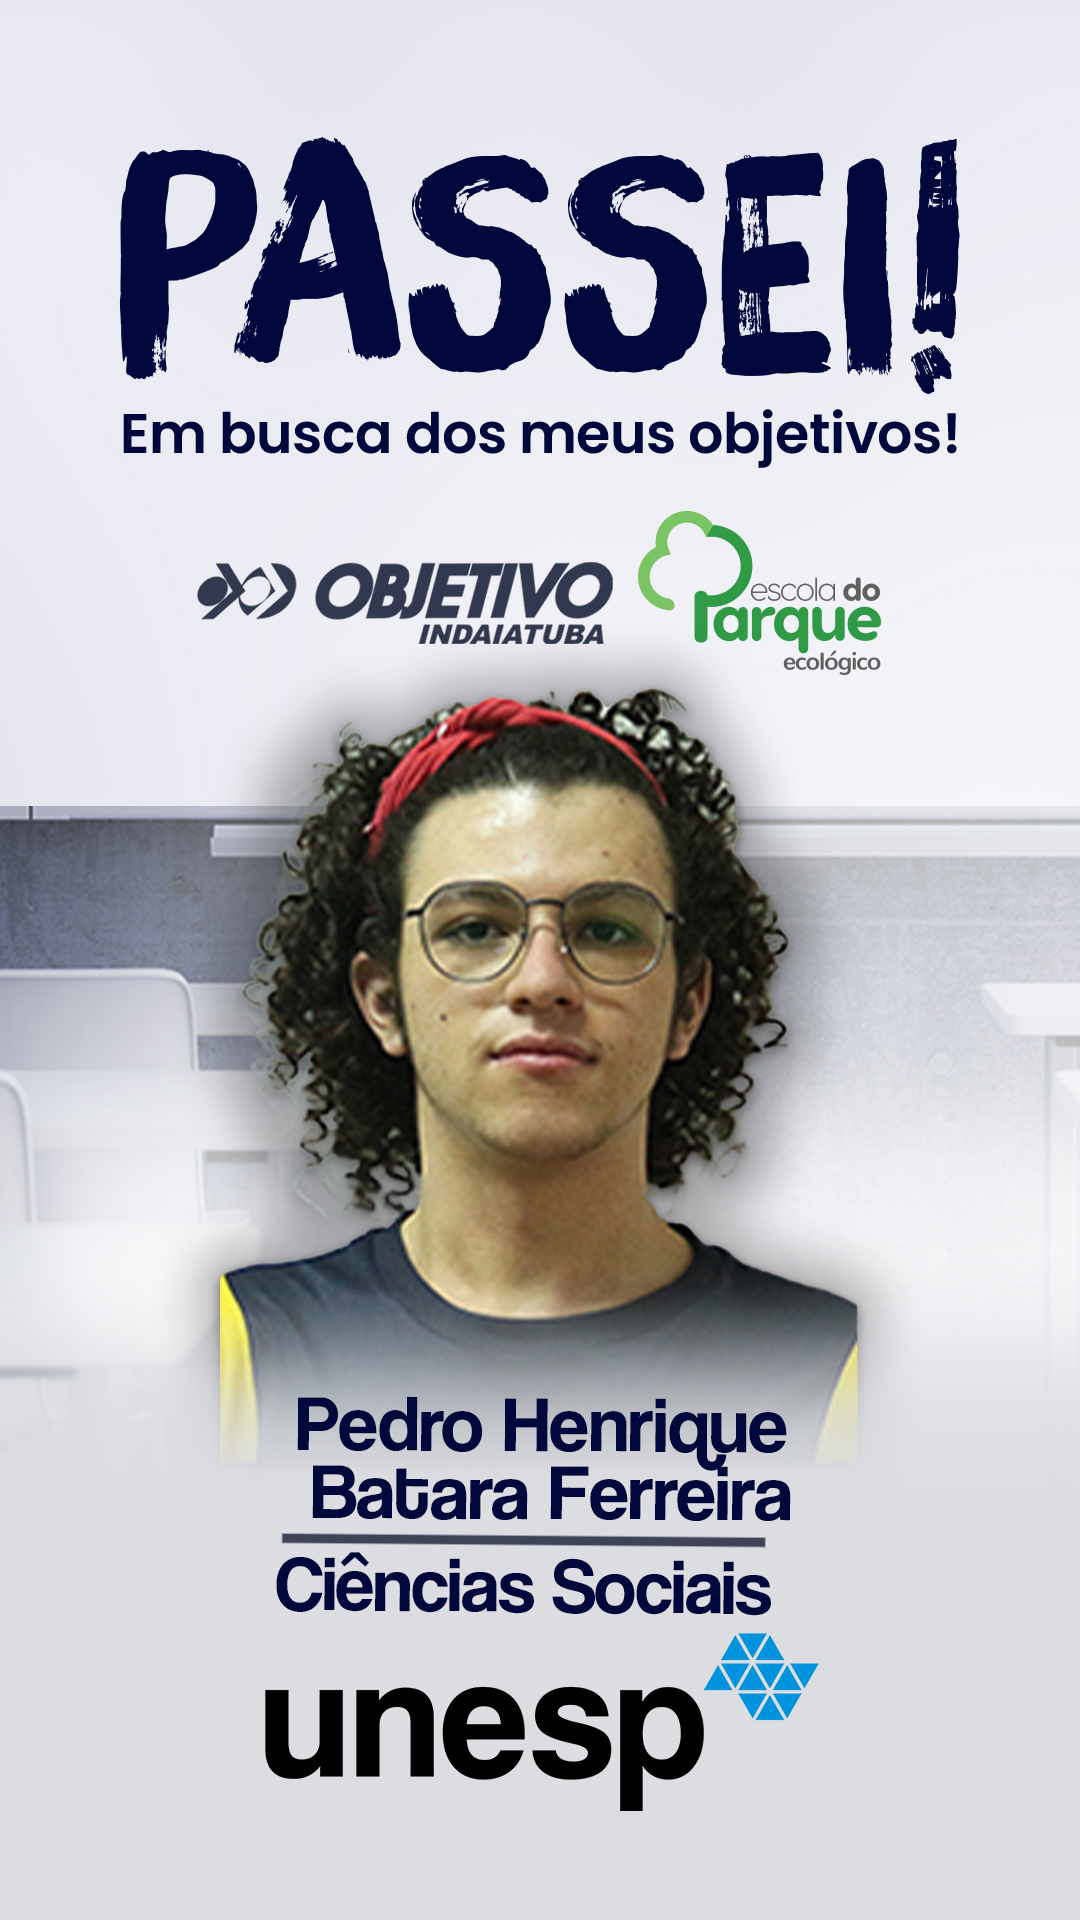 Pedro Henrique Batara Ferreira